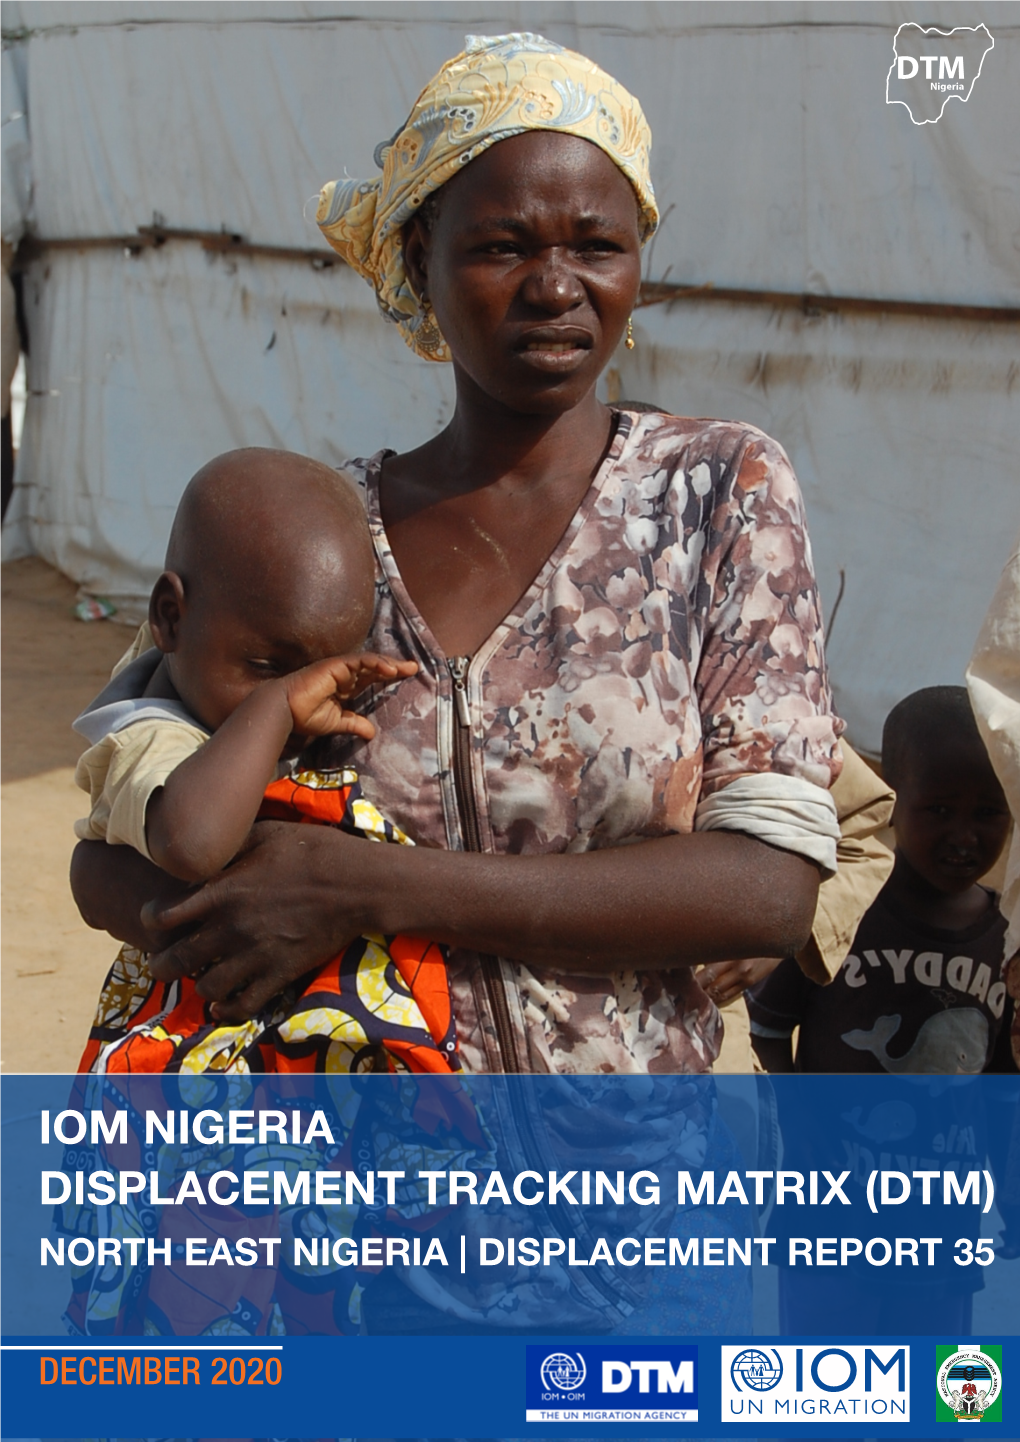 Iom Nigeria Displacement Tracking Matrix (Dtm) North East Nigeria | Displacement Report 35